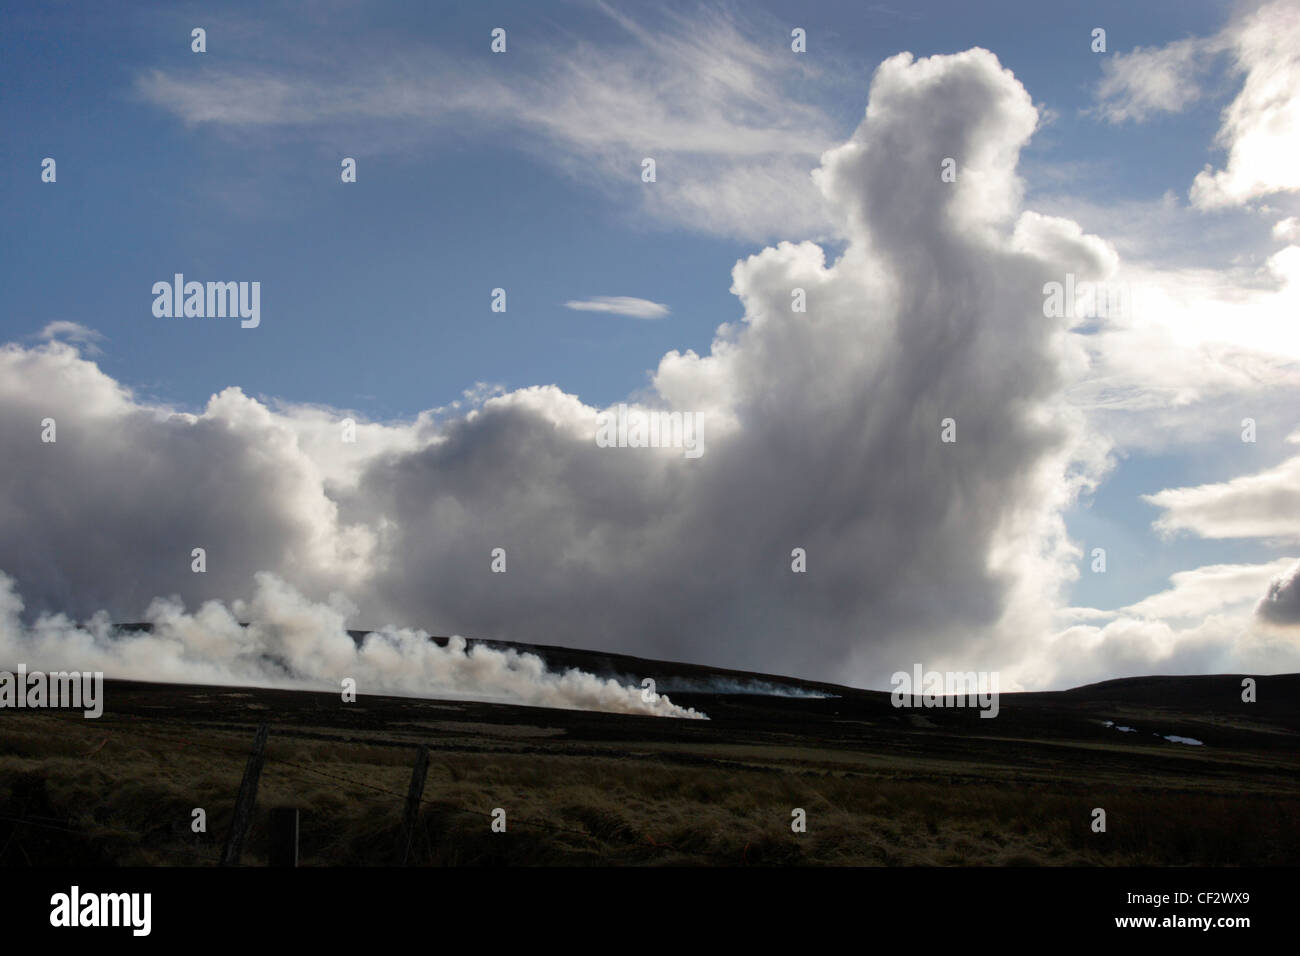 Cumulonimbus clouds rising over burning heather in Cabrach. Stock Photo